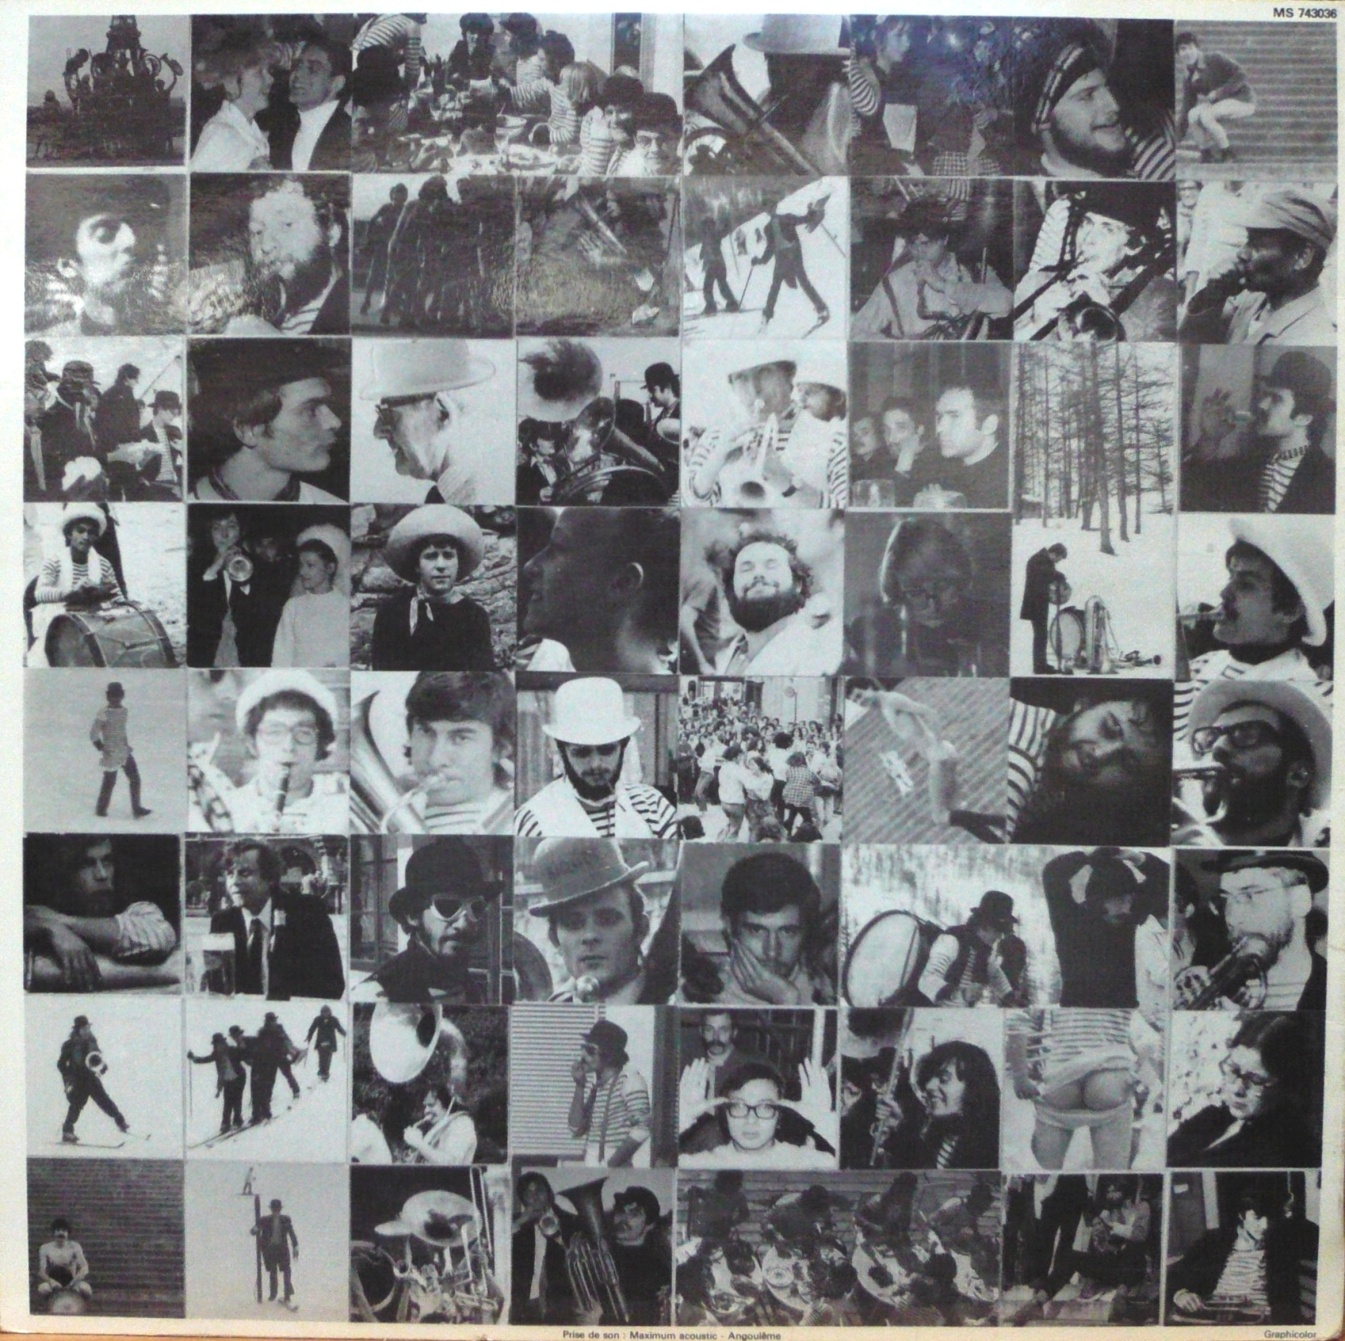 1974 : Fanfare Zava "Plus jamais ça" - pochette verso